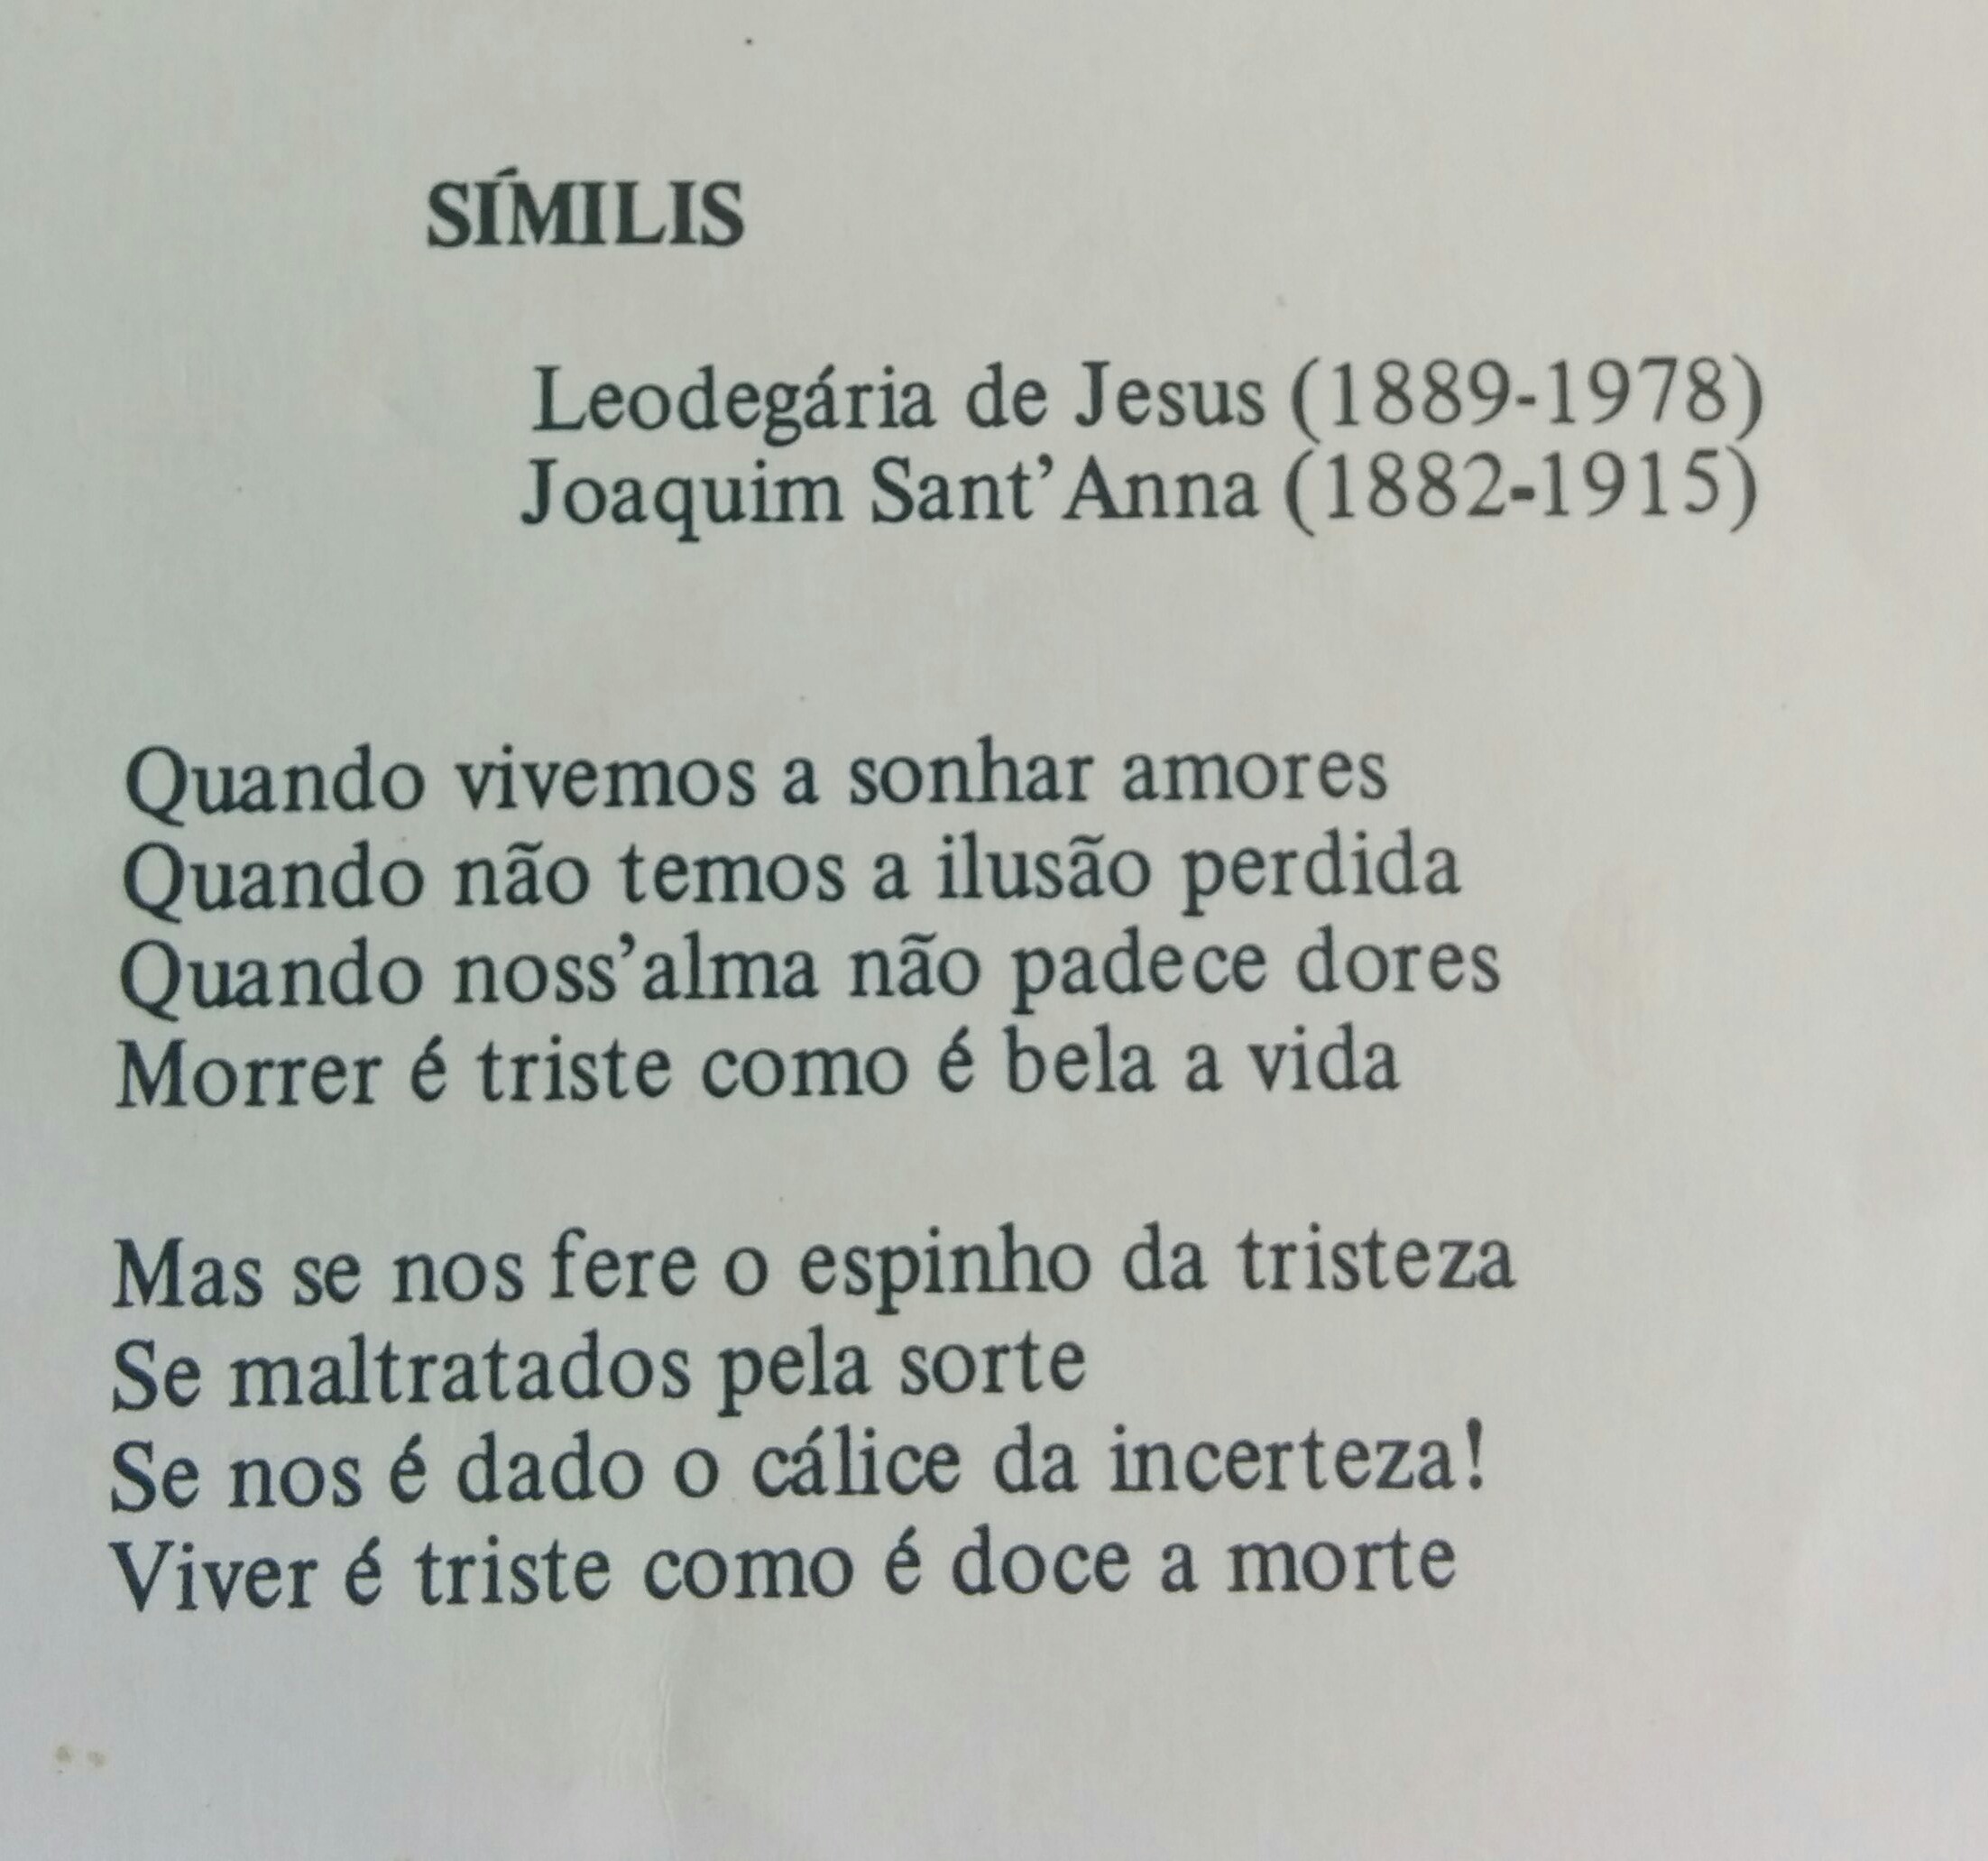 Símilis,